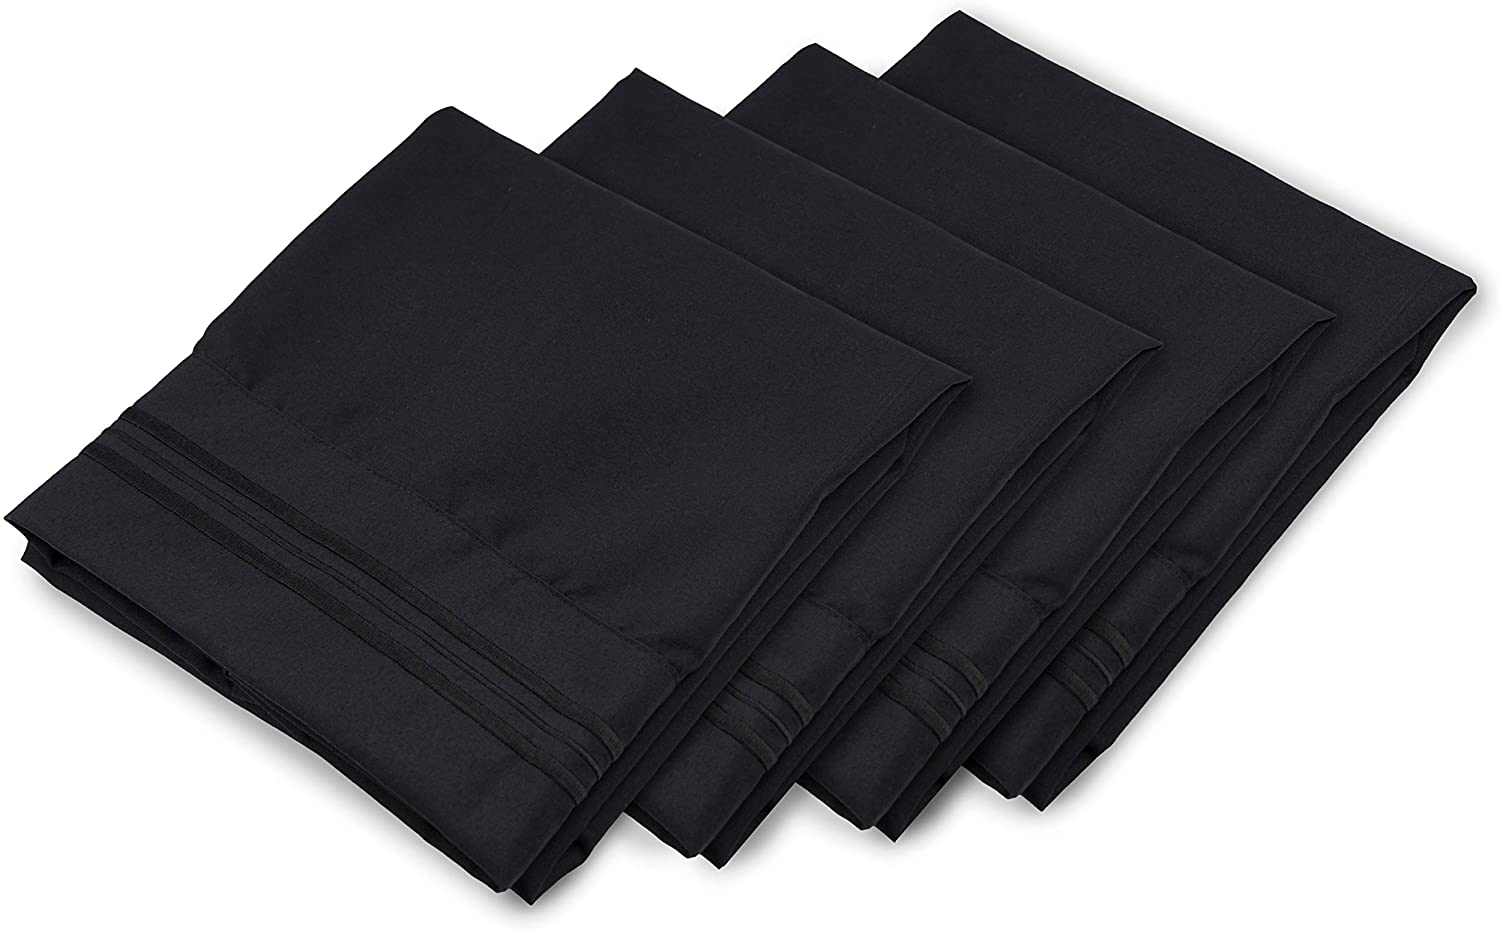 tes 4 Pillowcase Set - Black